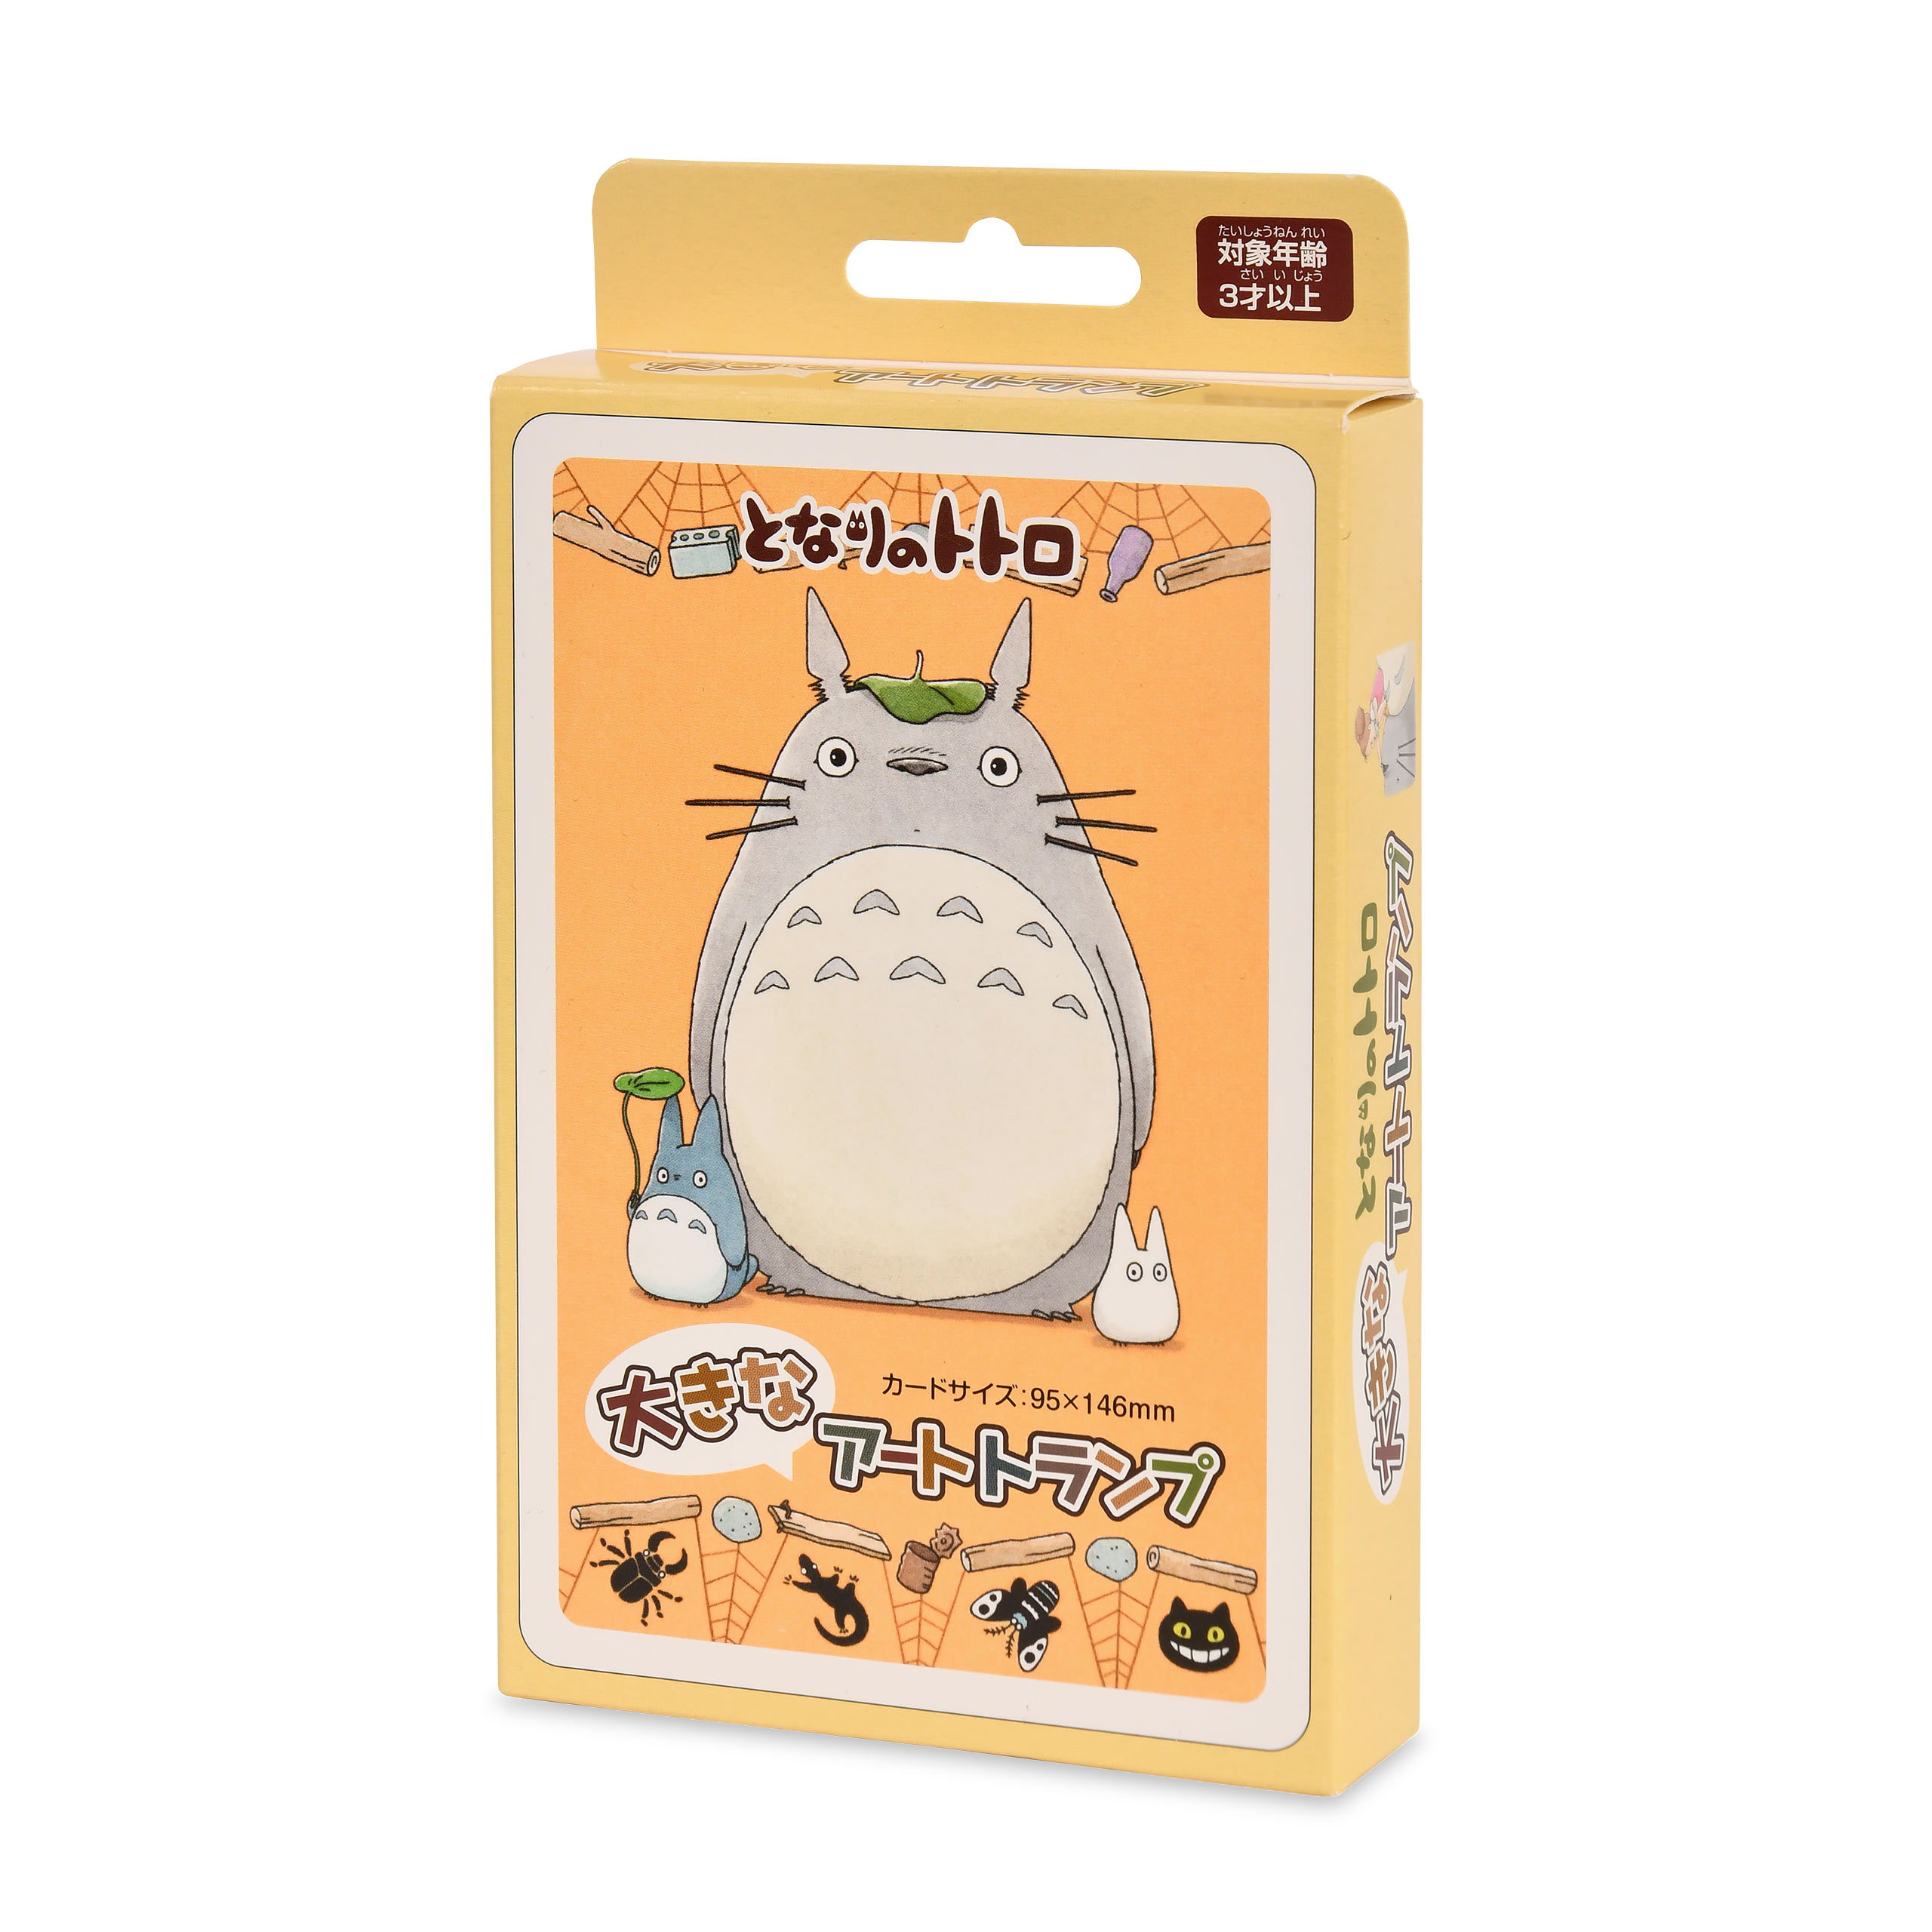 Totoro - XXL Playing Cards